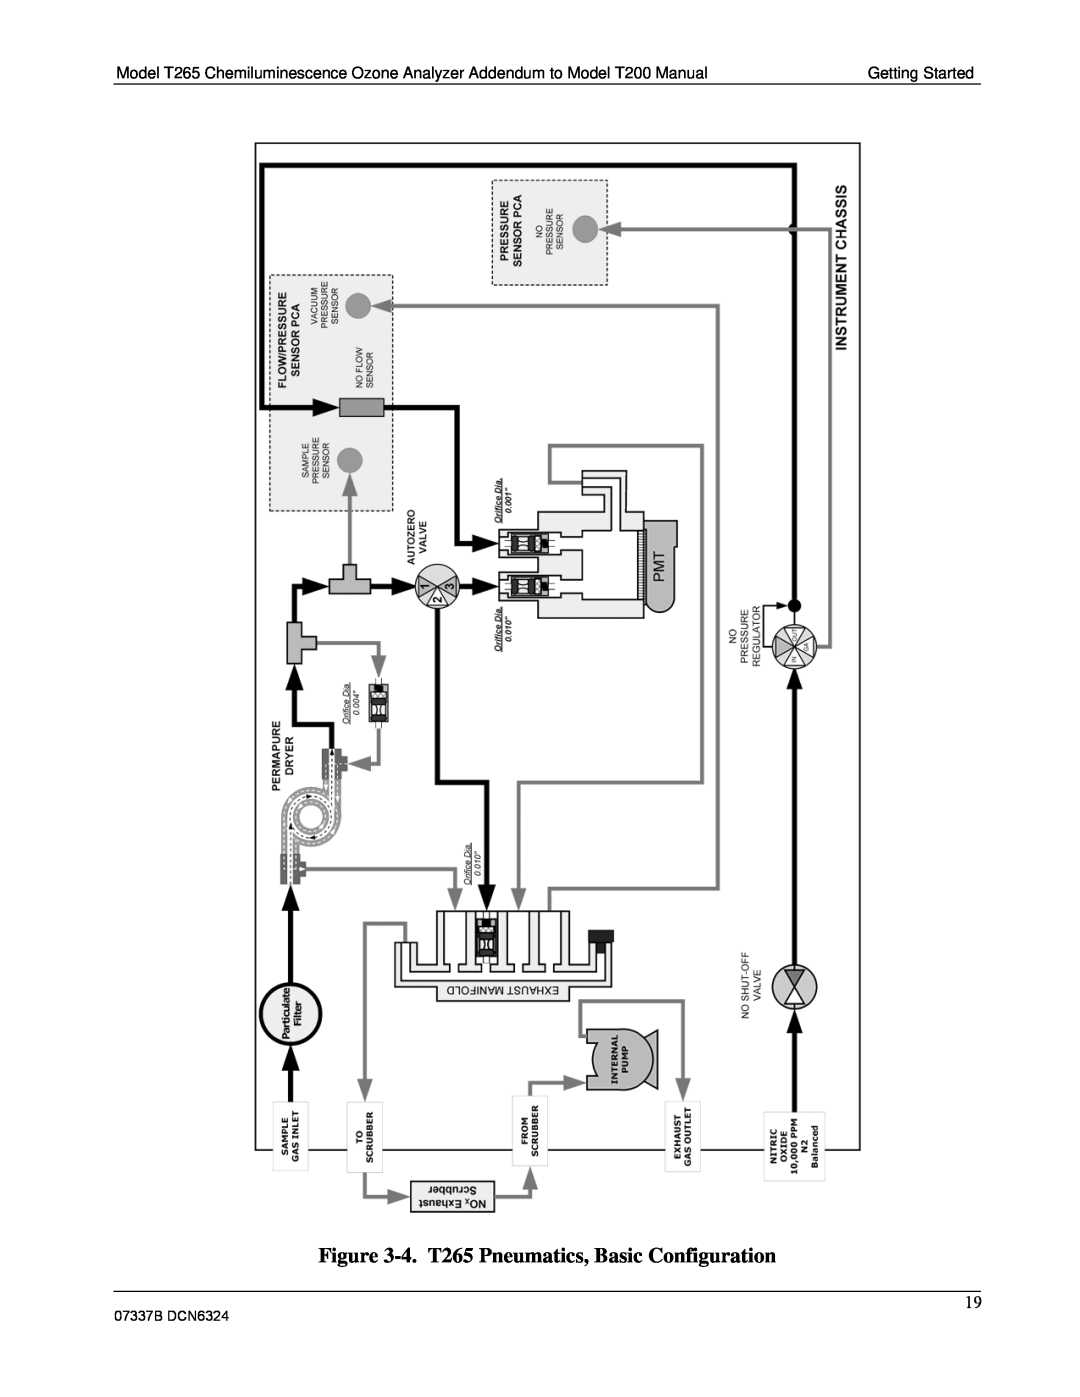 Teledyne manual 4.T265 Pneumatics, Basic Configuration, Getting Started, 07337B DCN6324 